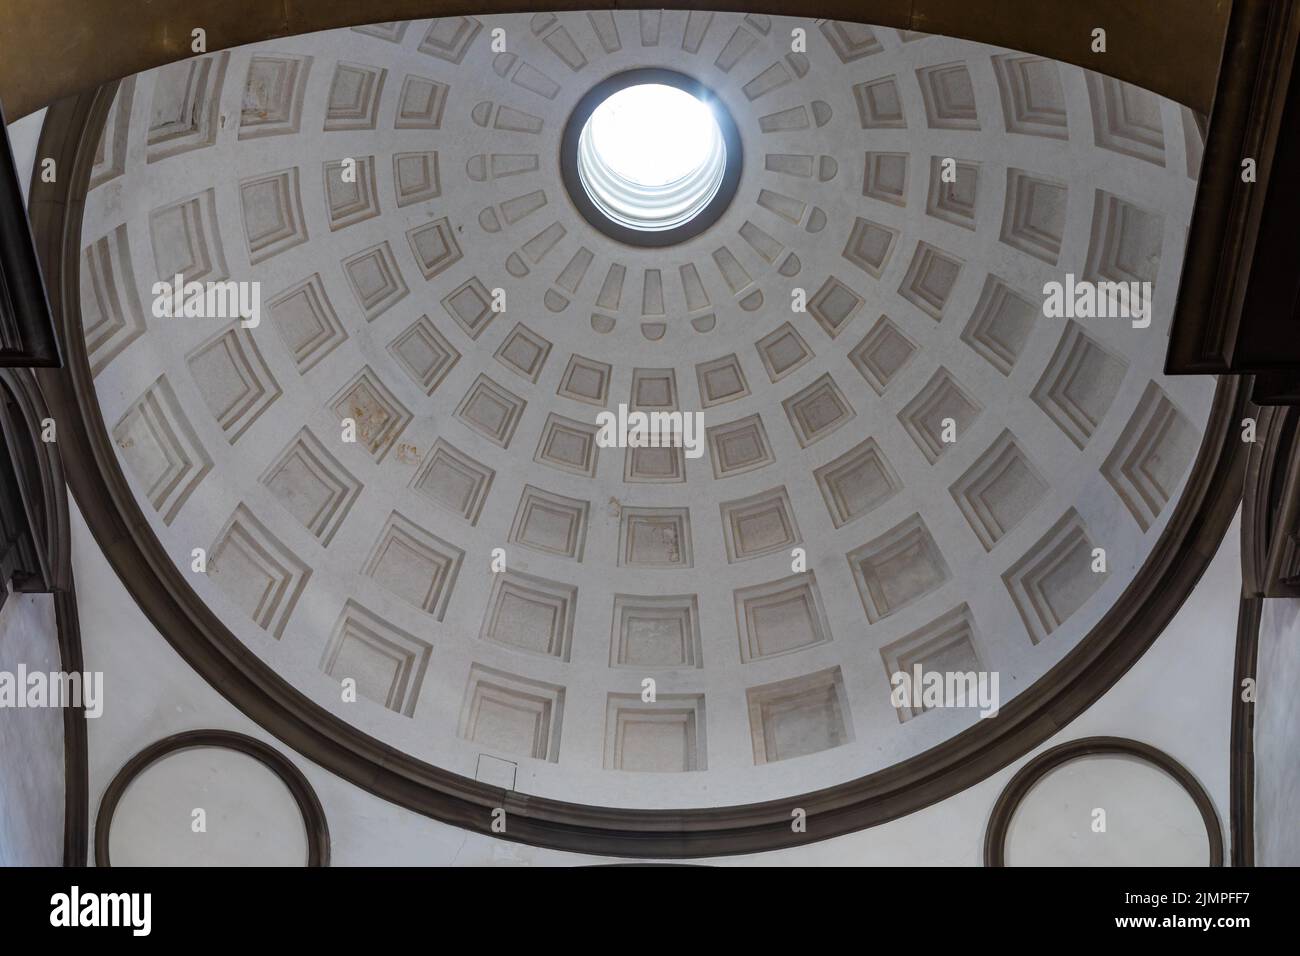 Innenraum der Medici-Kapellen - Cappelle Medicee. Michelangelo Renaissance Kunst in Florenz, Italien. Stockfoto